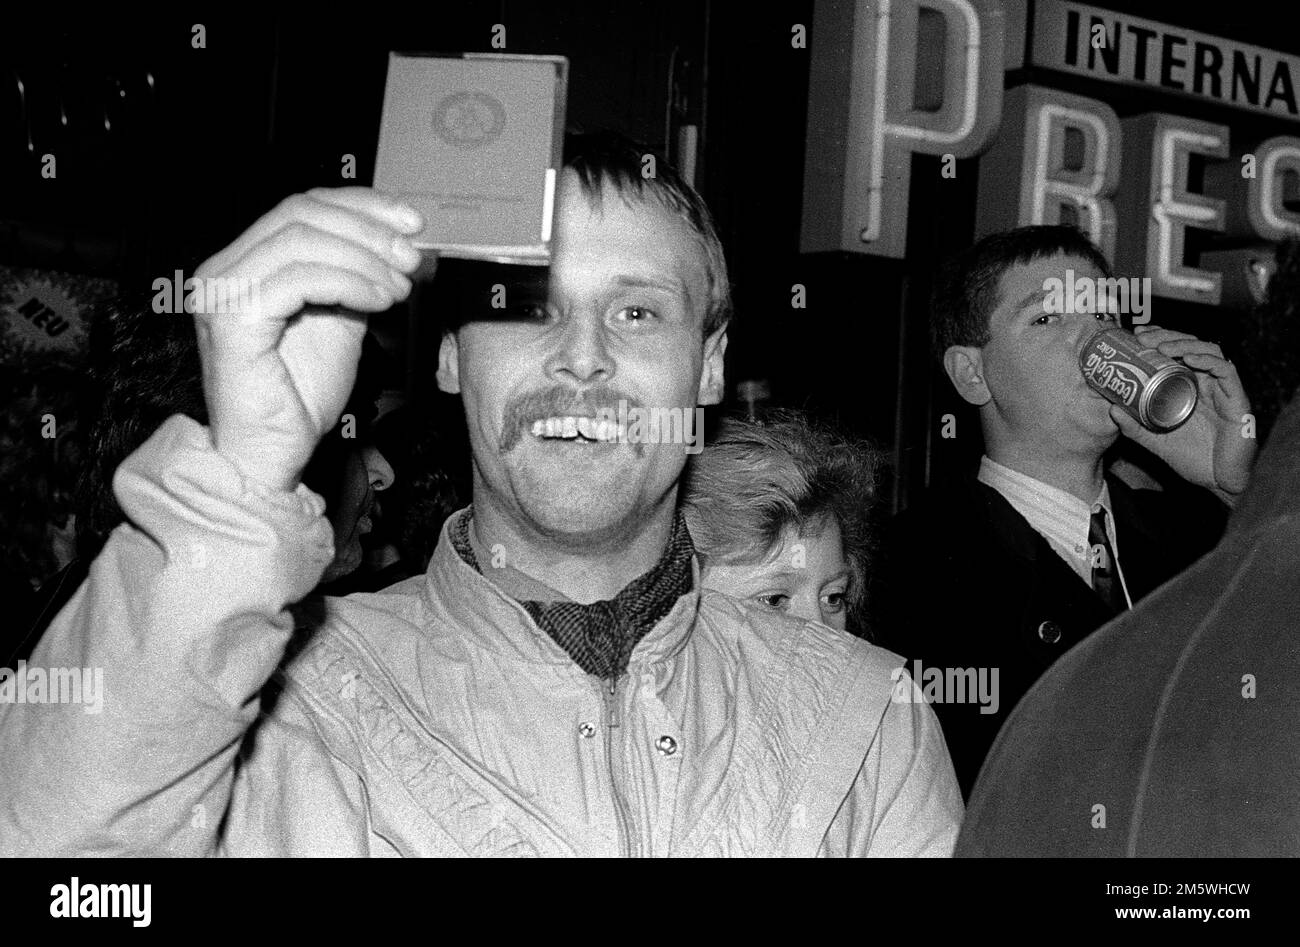 GDR, Berlin, 09. 11. 1989, Opening of the Berlin Wall, Celebration on KuDamm (Kurfuerstendamm), GDR citizen shows his GDR identity card Stock Photo